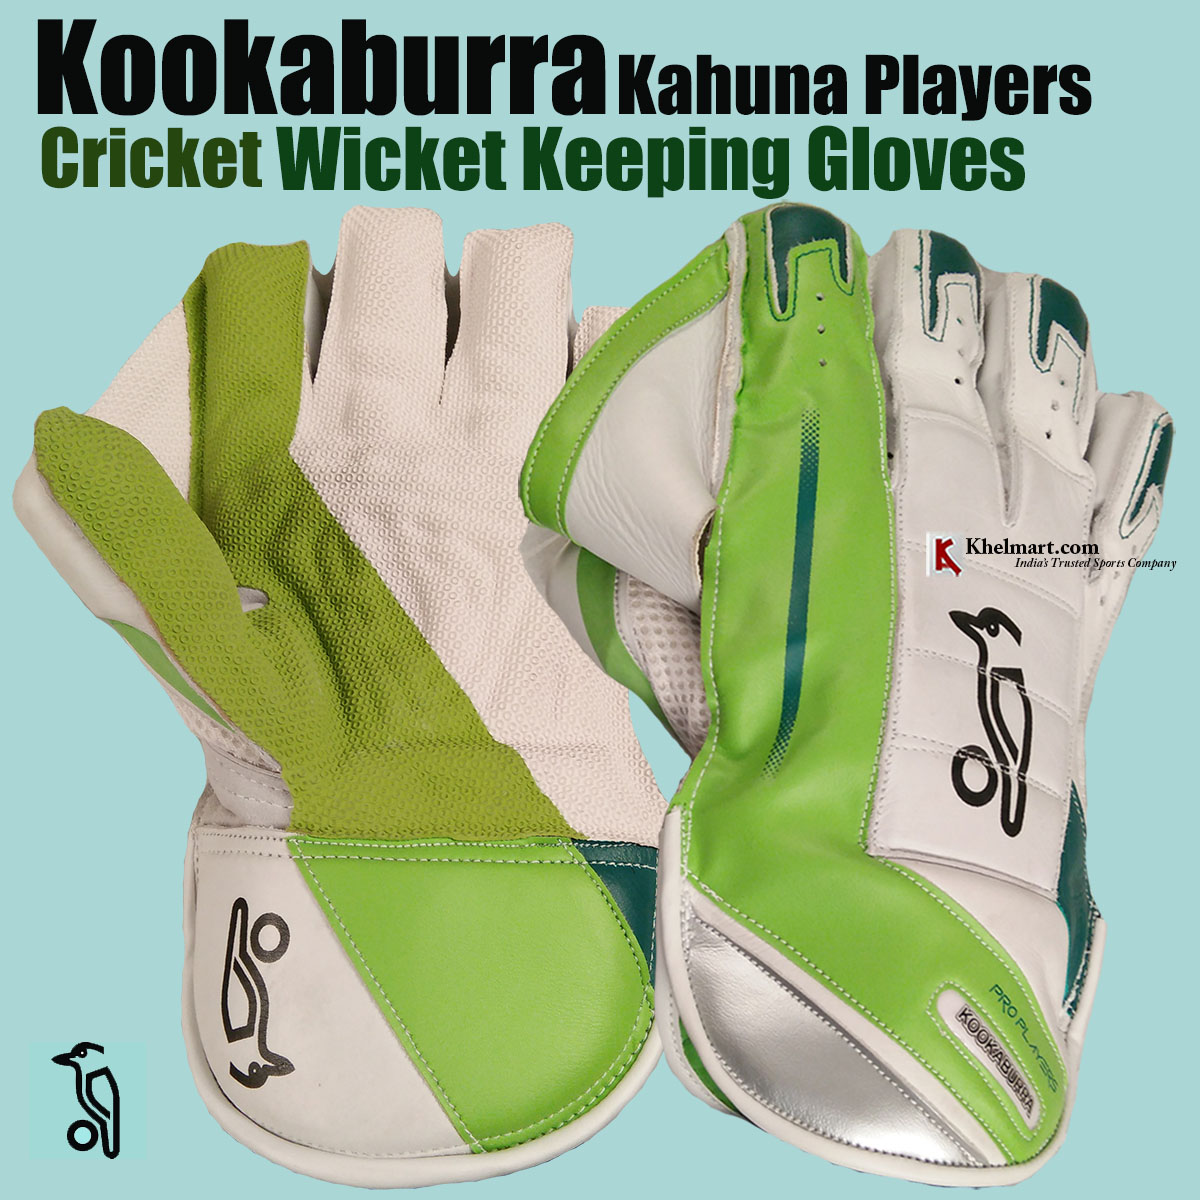 Kookaburra_Kahuna_Players_Wicket_Keeping_Gloves_1.jpg